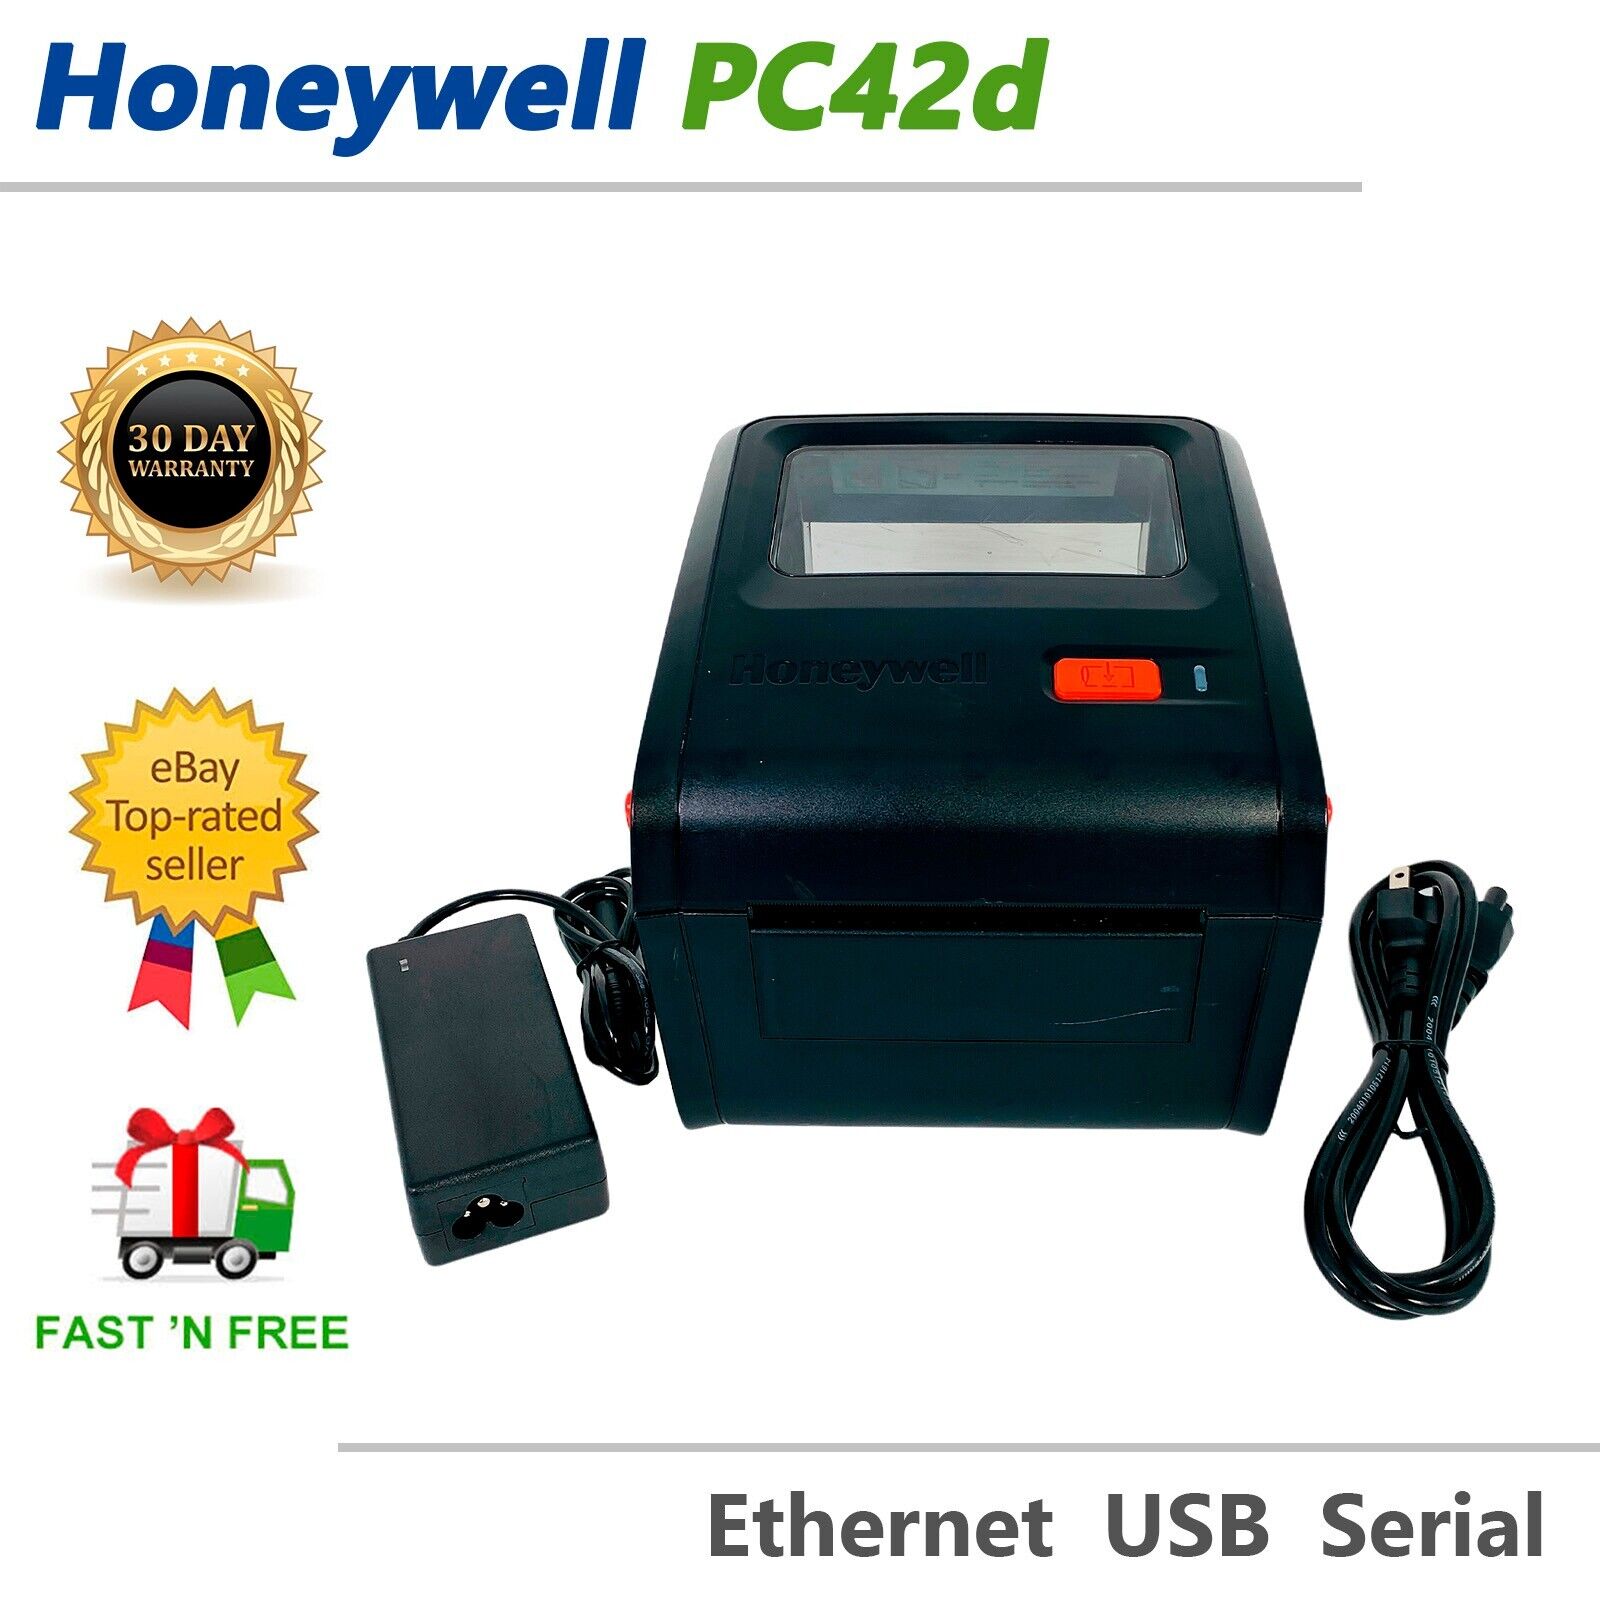 Honeywell PC42d Direct Thermal Desktop Label Printer LAN USB Serial TESTED